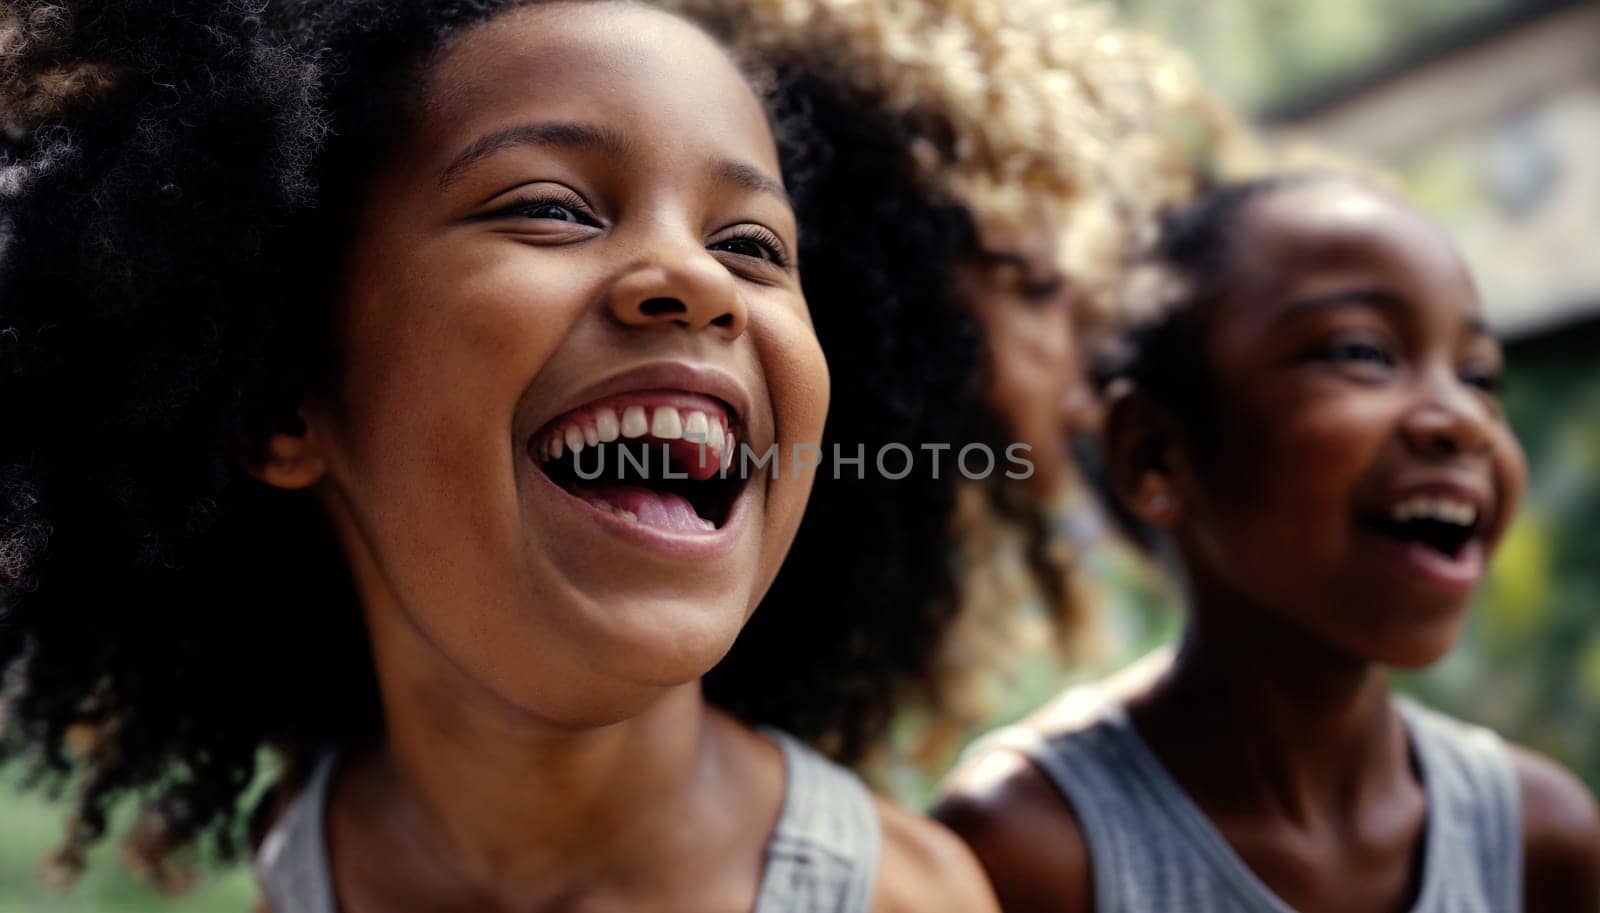 Joyful Children Laughing Outdoors During Daytime Play by chrisroll